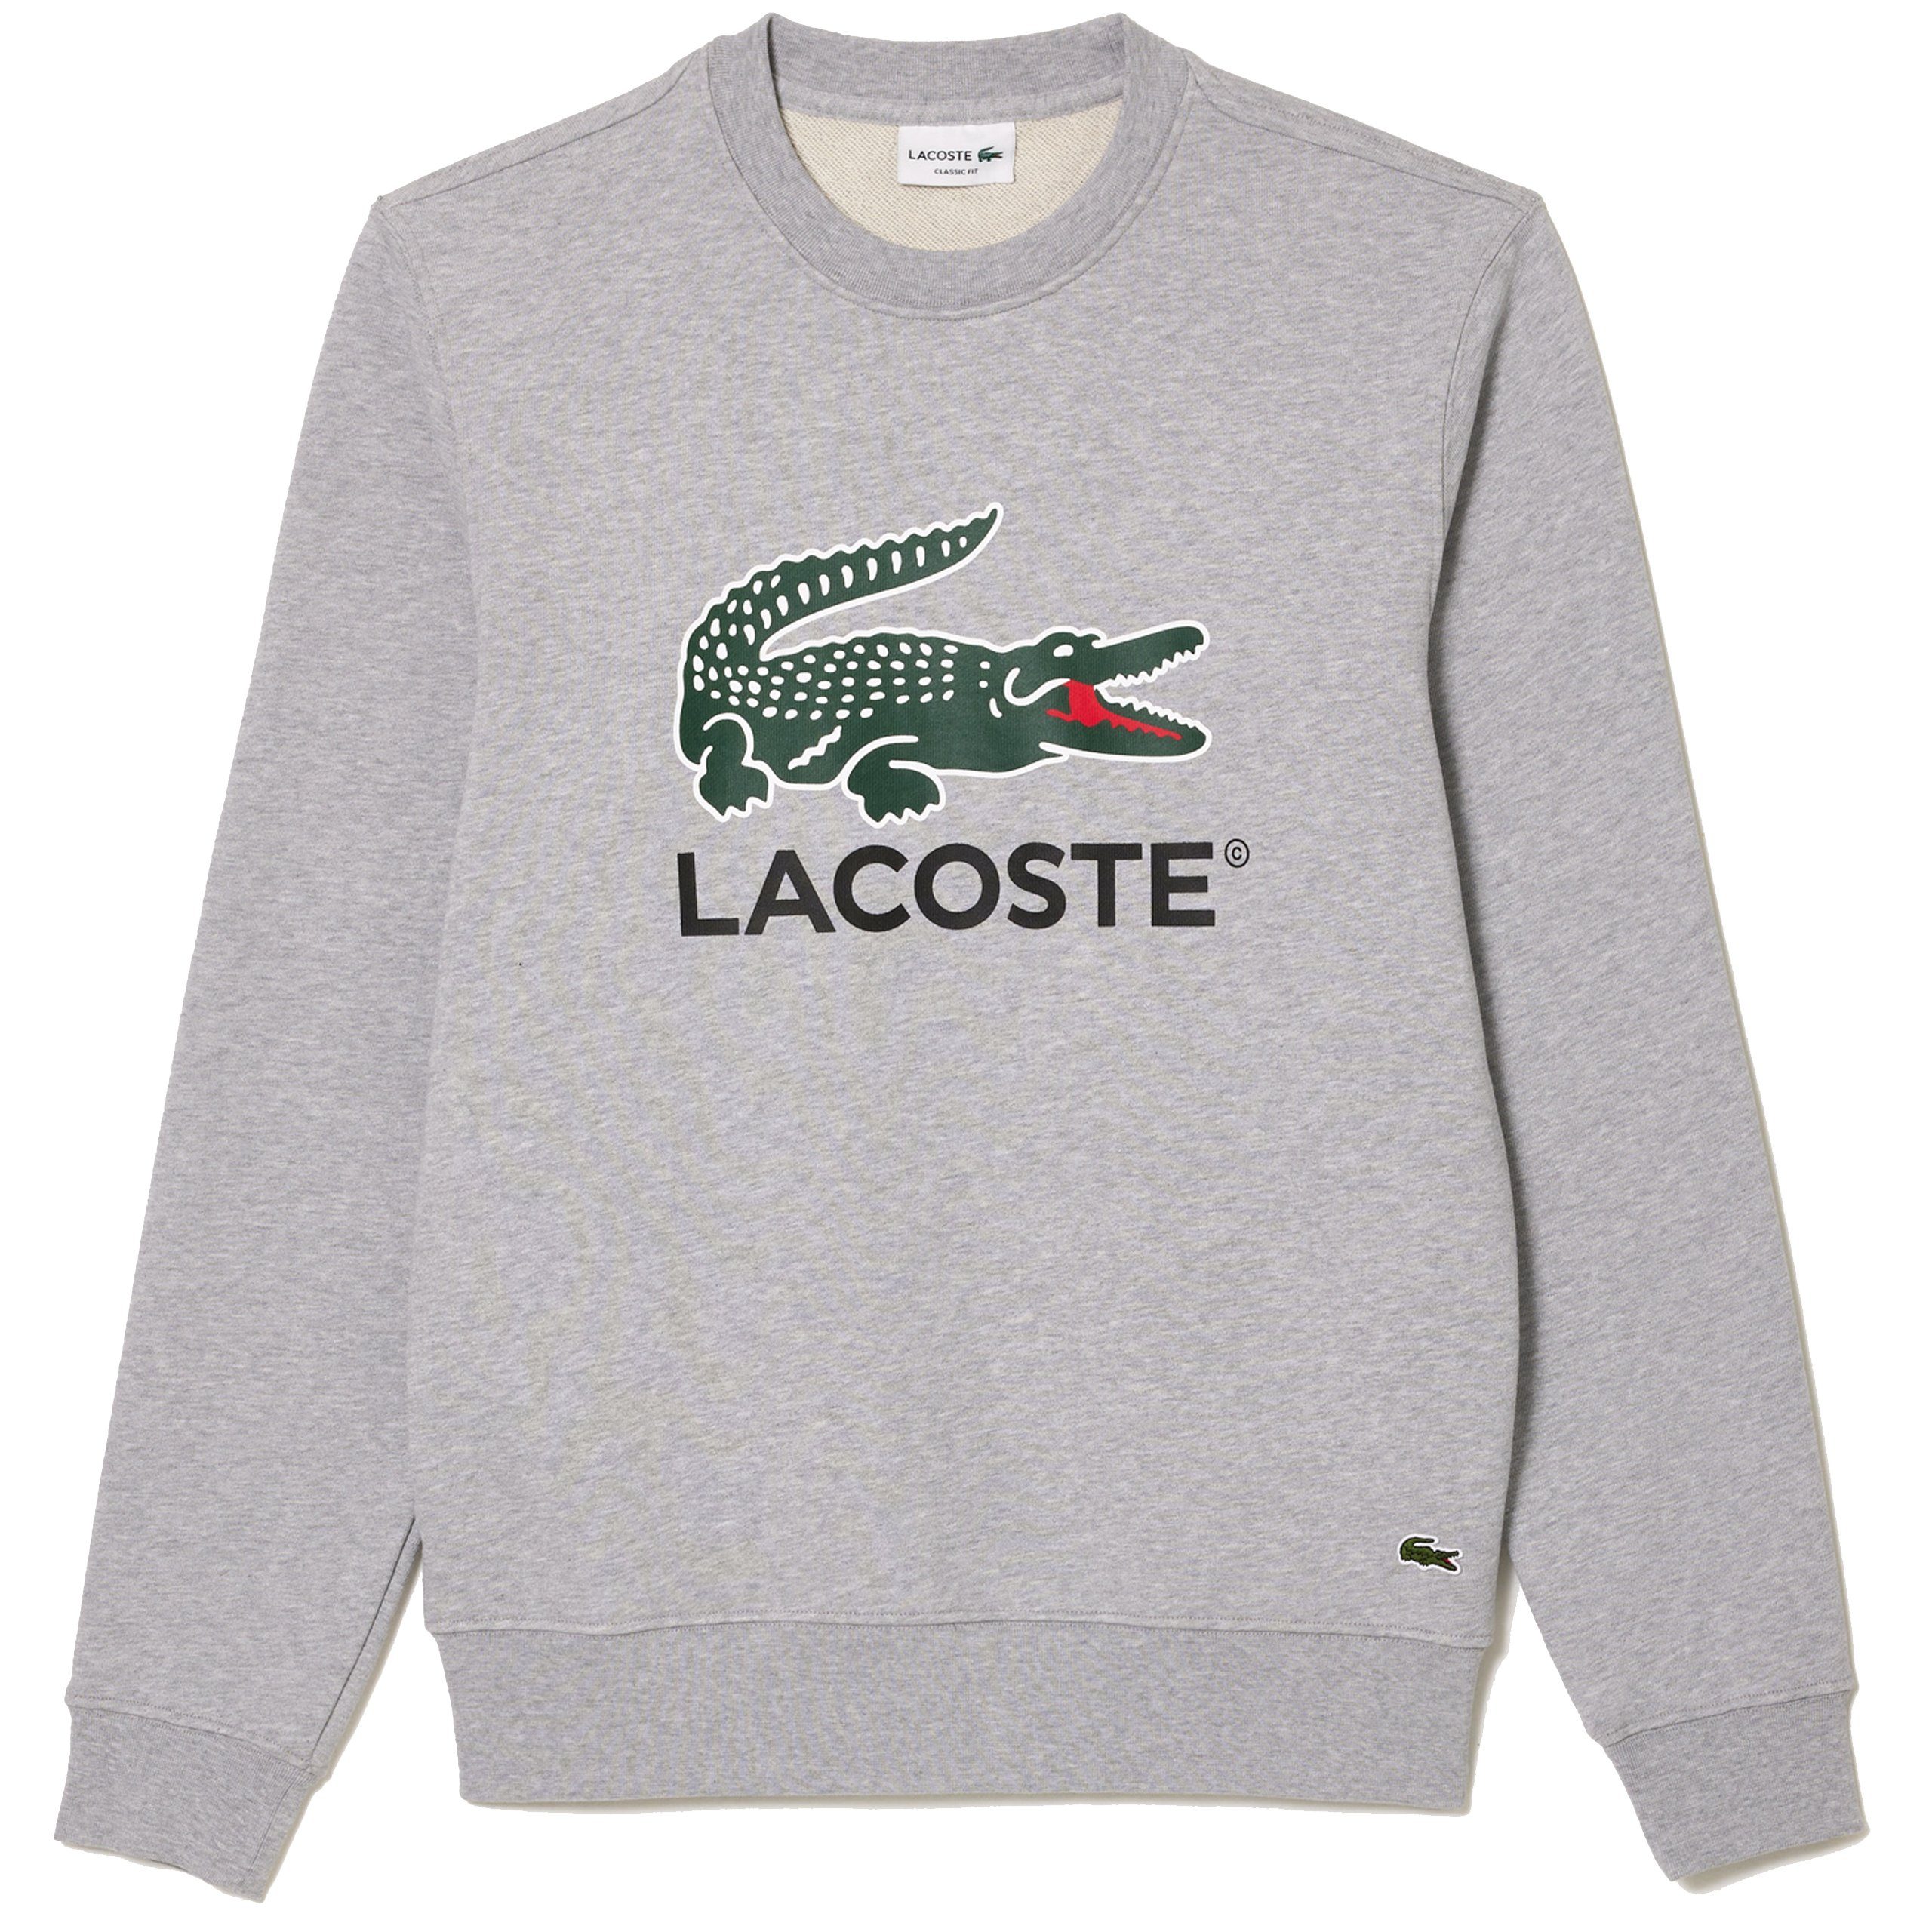 Herren silver shine Pullover Sweatshirt Lacoste aus Lacoste Baumwollfleece Sweatshirt